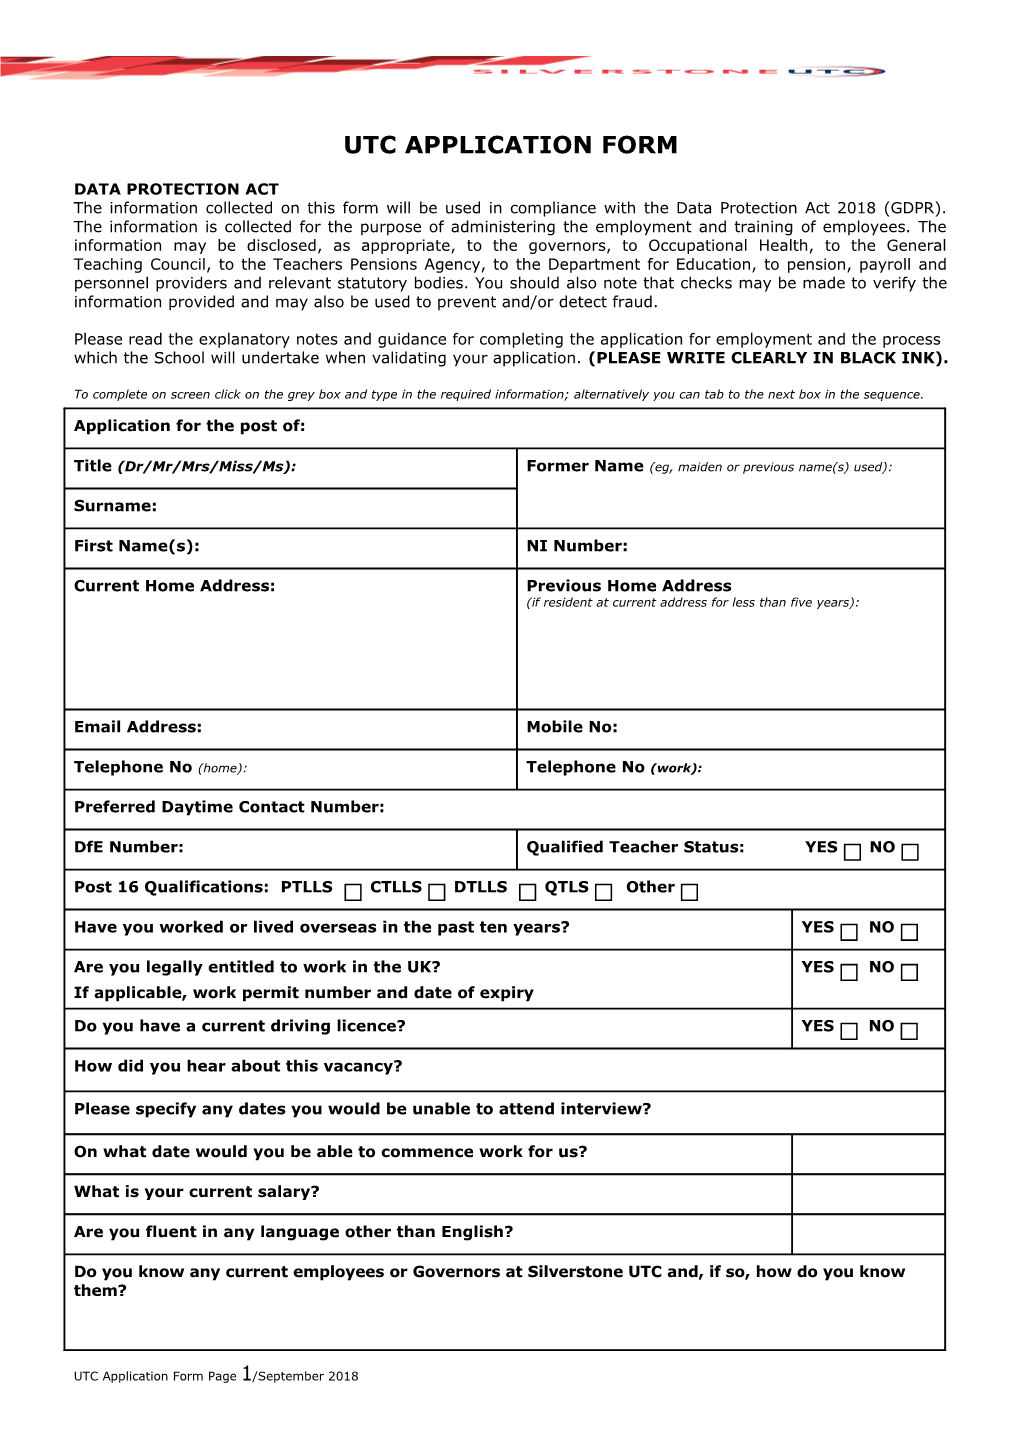 UTC Application Form